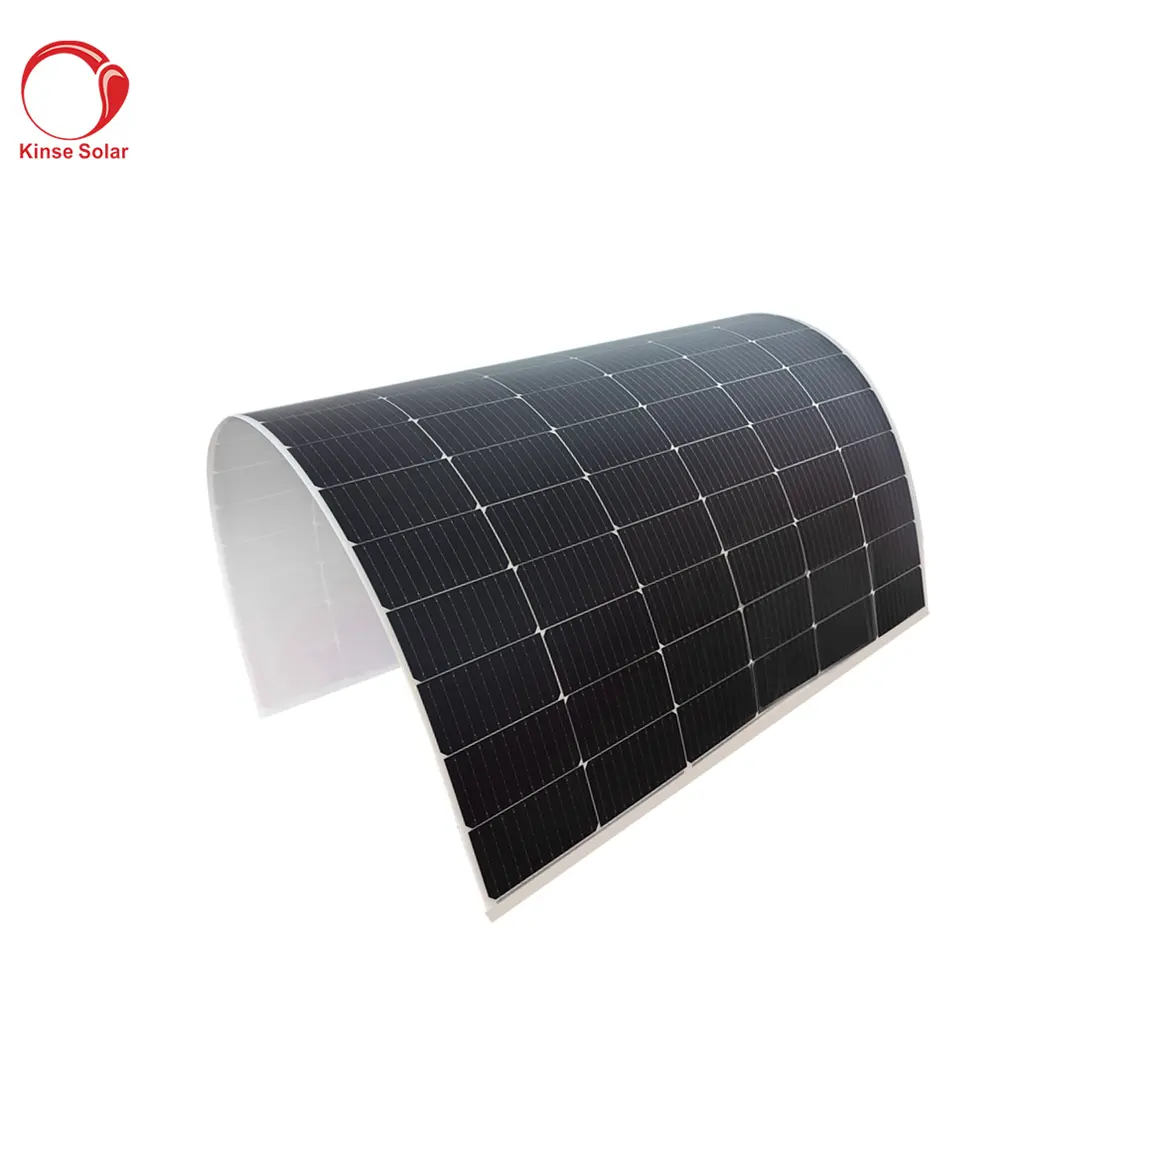 Painel solar semi-flexível Kinse energy 390w Painel solar de 390 Watts feito na China